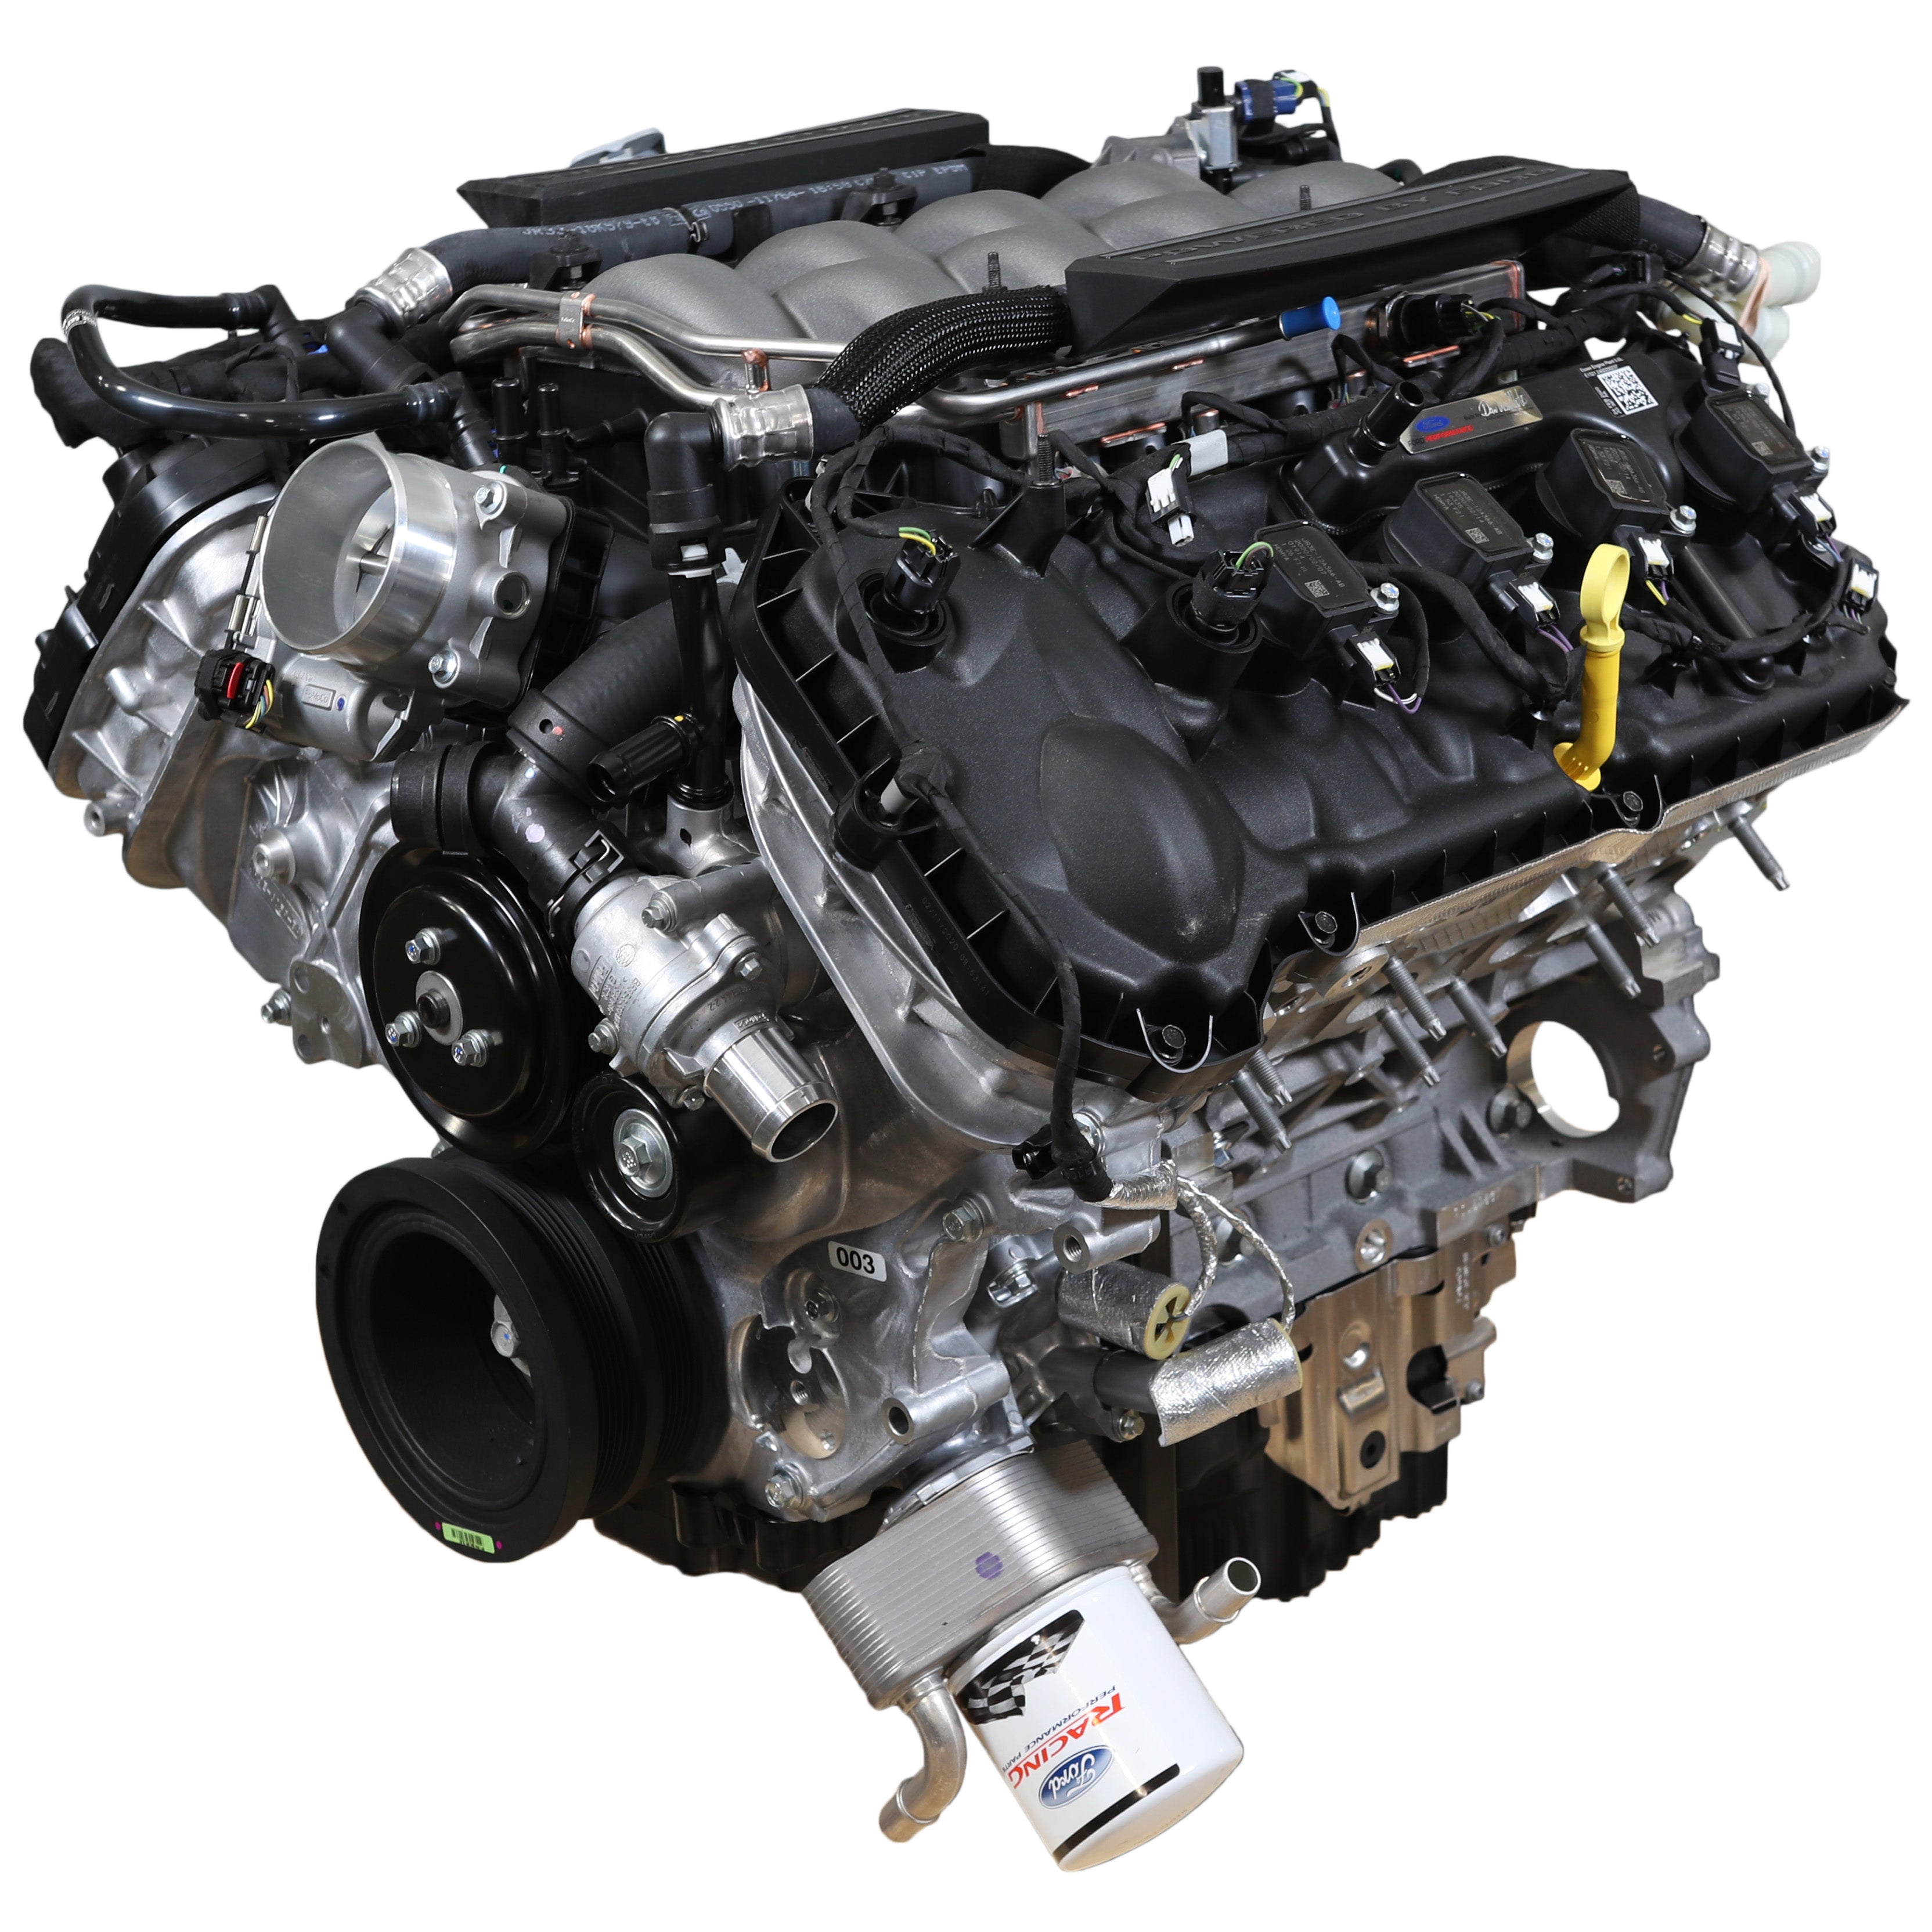 Motore Ford Performance 5.0L "Aluminator" Gen 3 a cassa - Bassa compressione per build FI